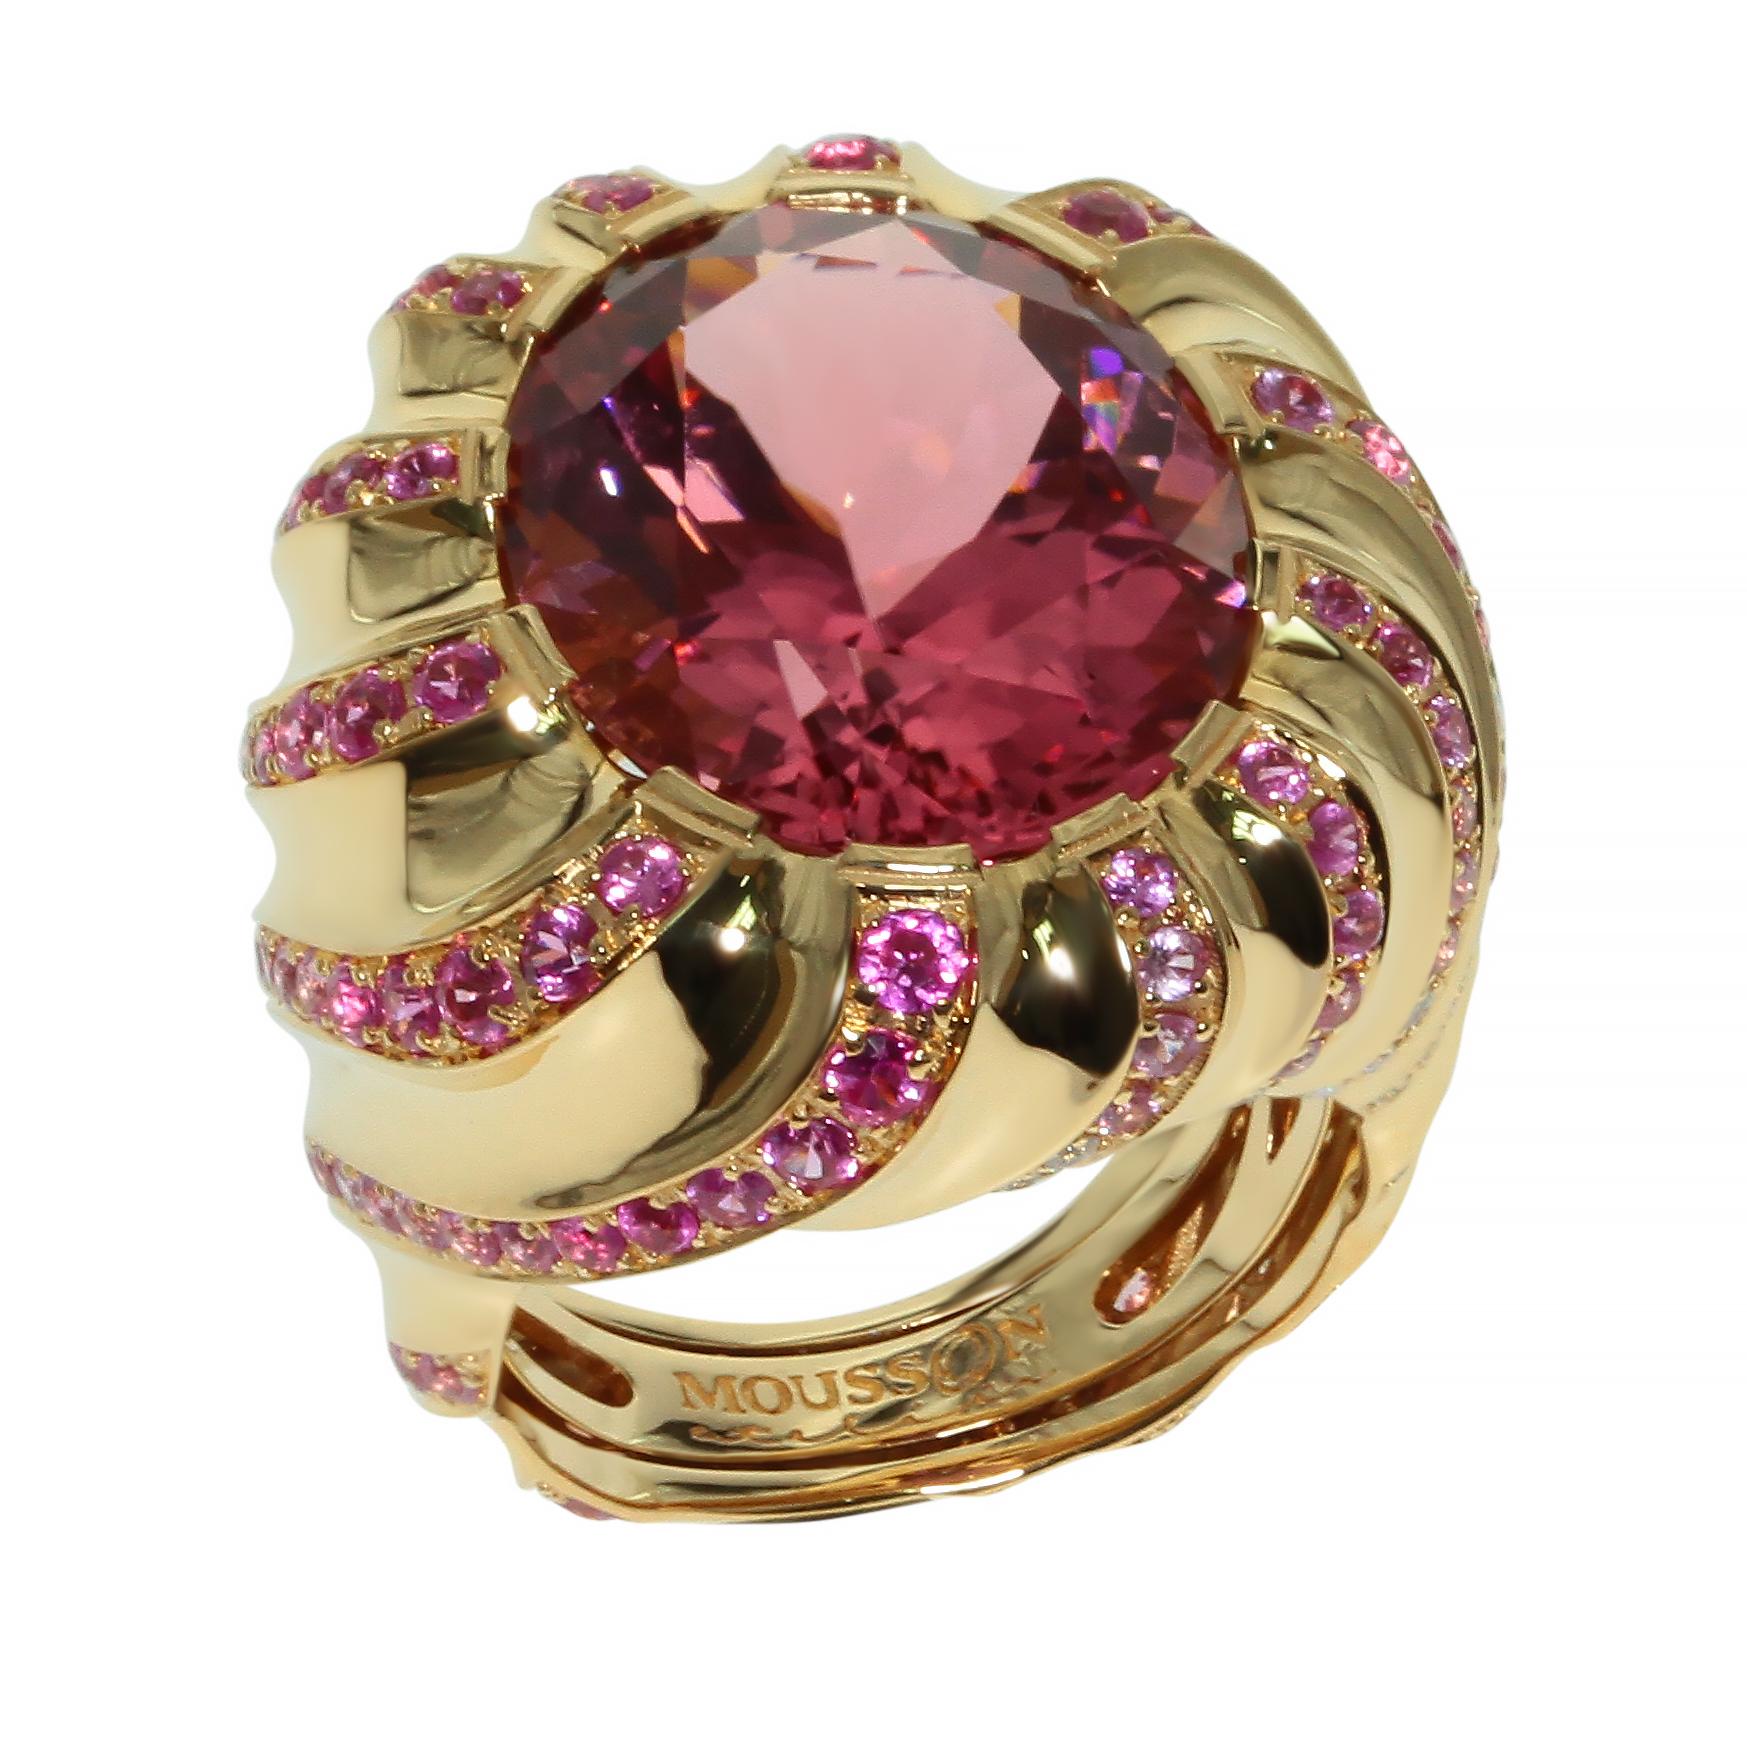 Bague en or jaune 18 carats avec tourmaline rose, diamant et saphir rose